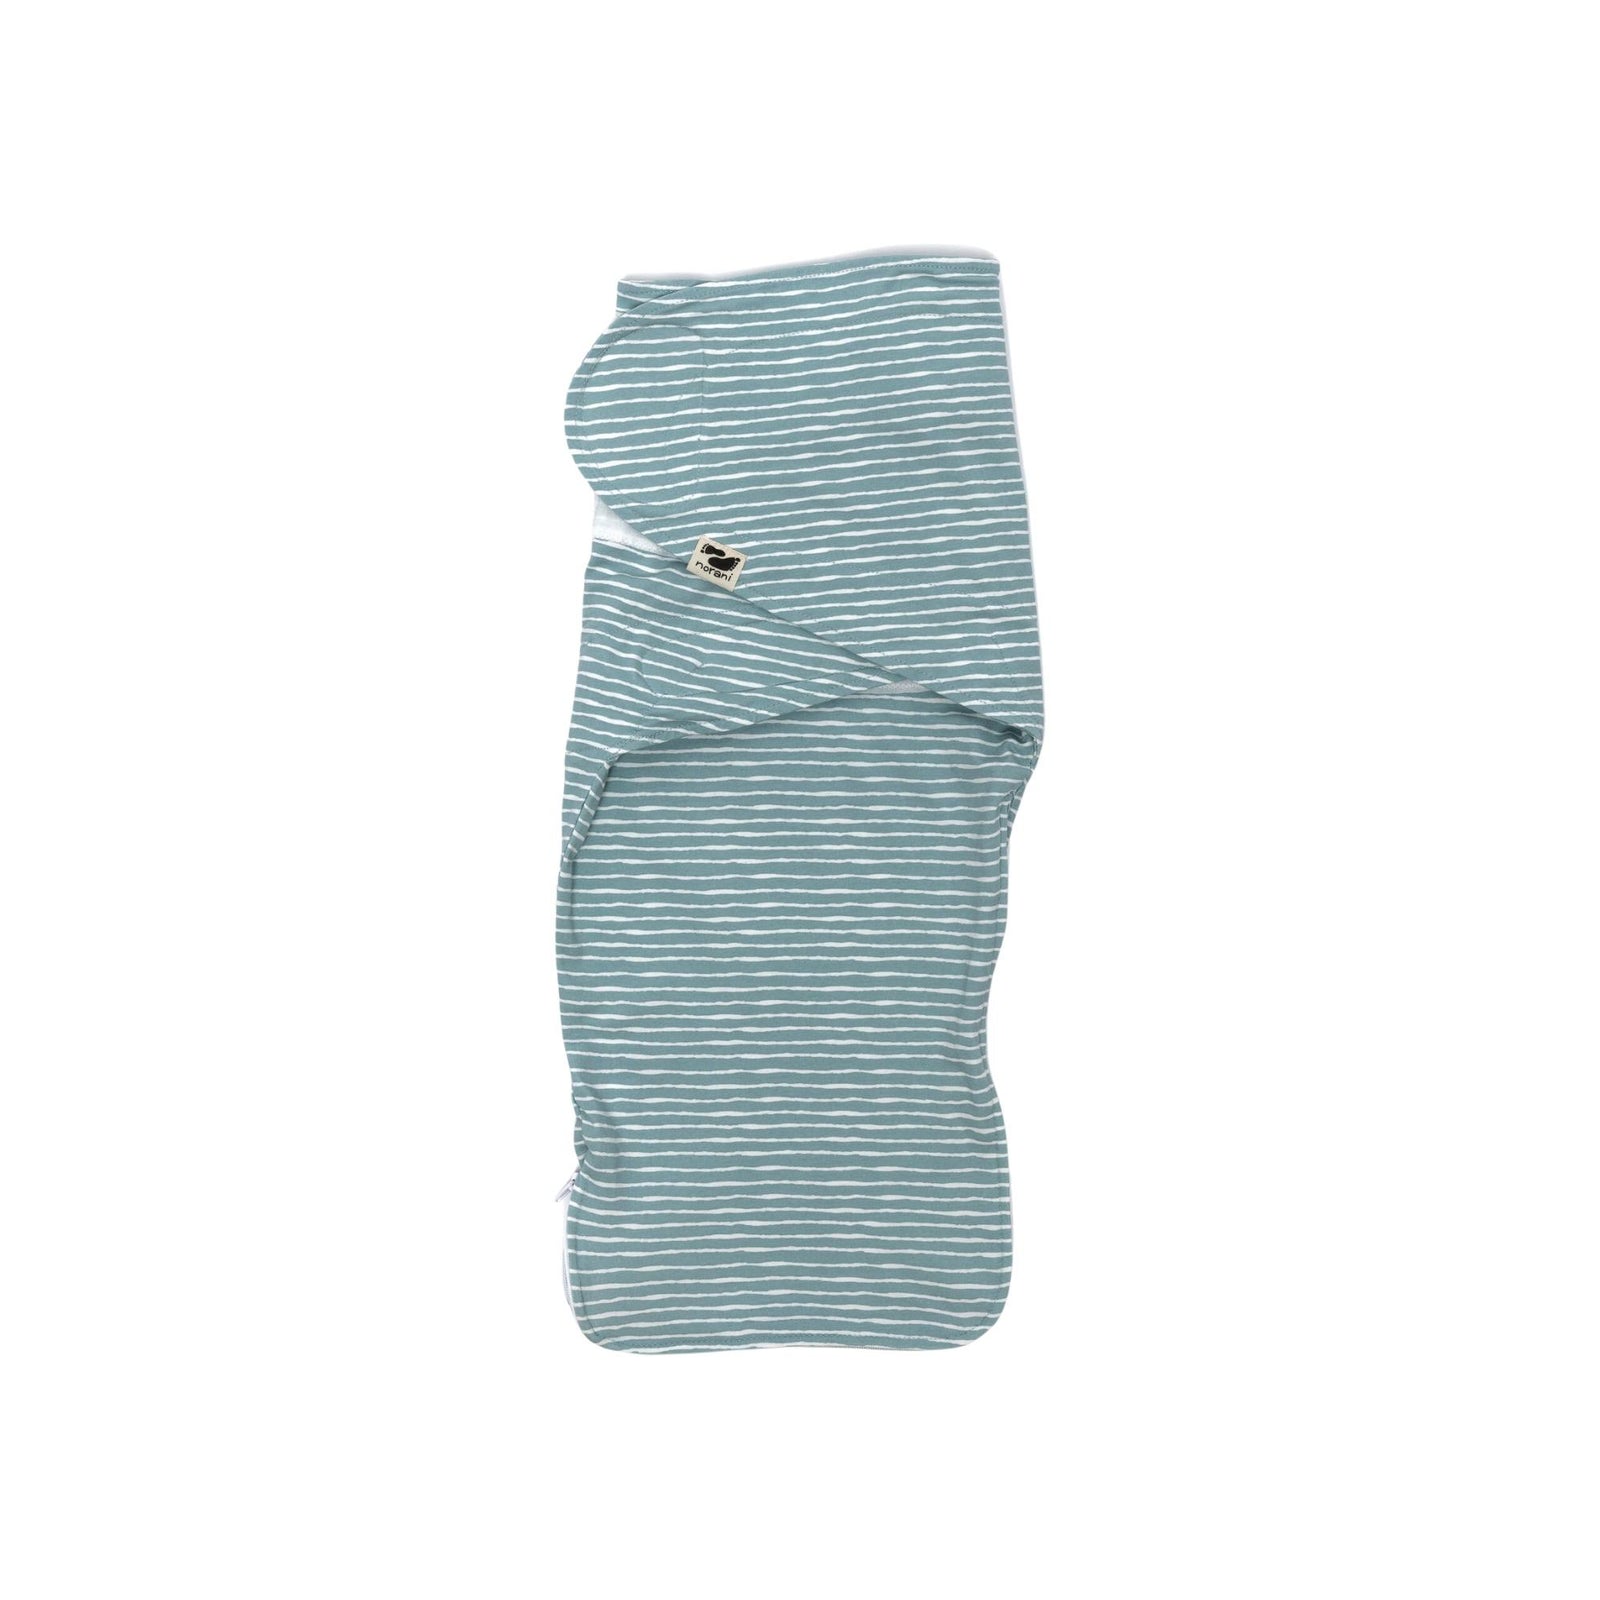 Norani Baby Snugababe Sleep Pod with Arm Inserts - Green Stripes